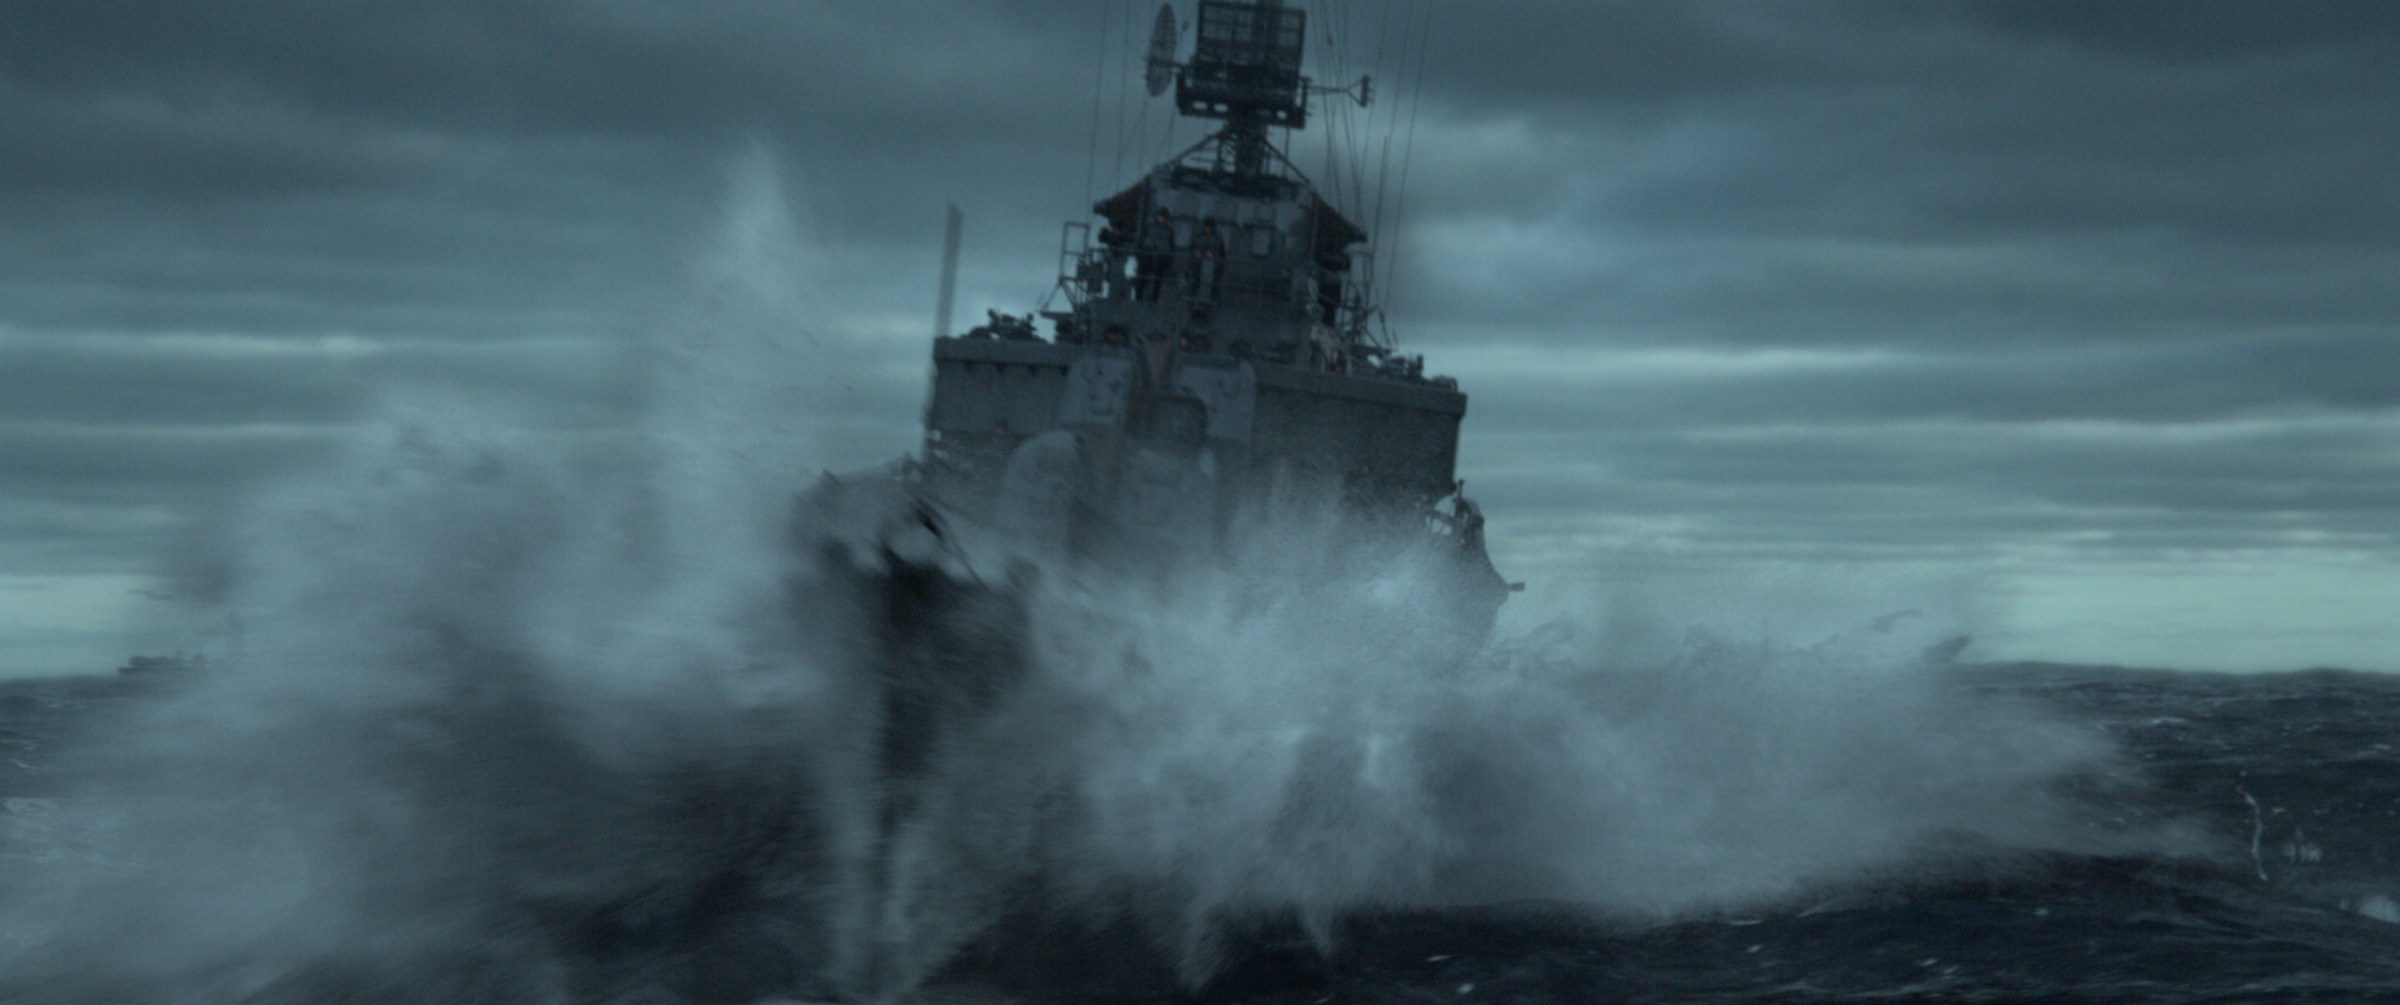 Fully rendered battleship in high seas.